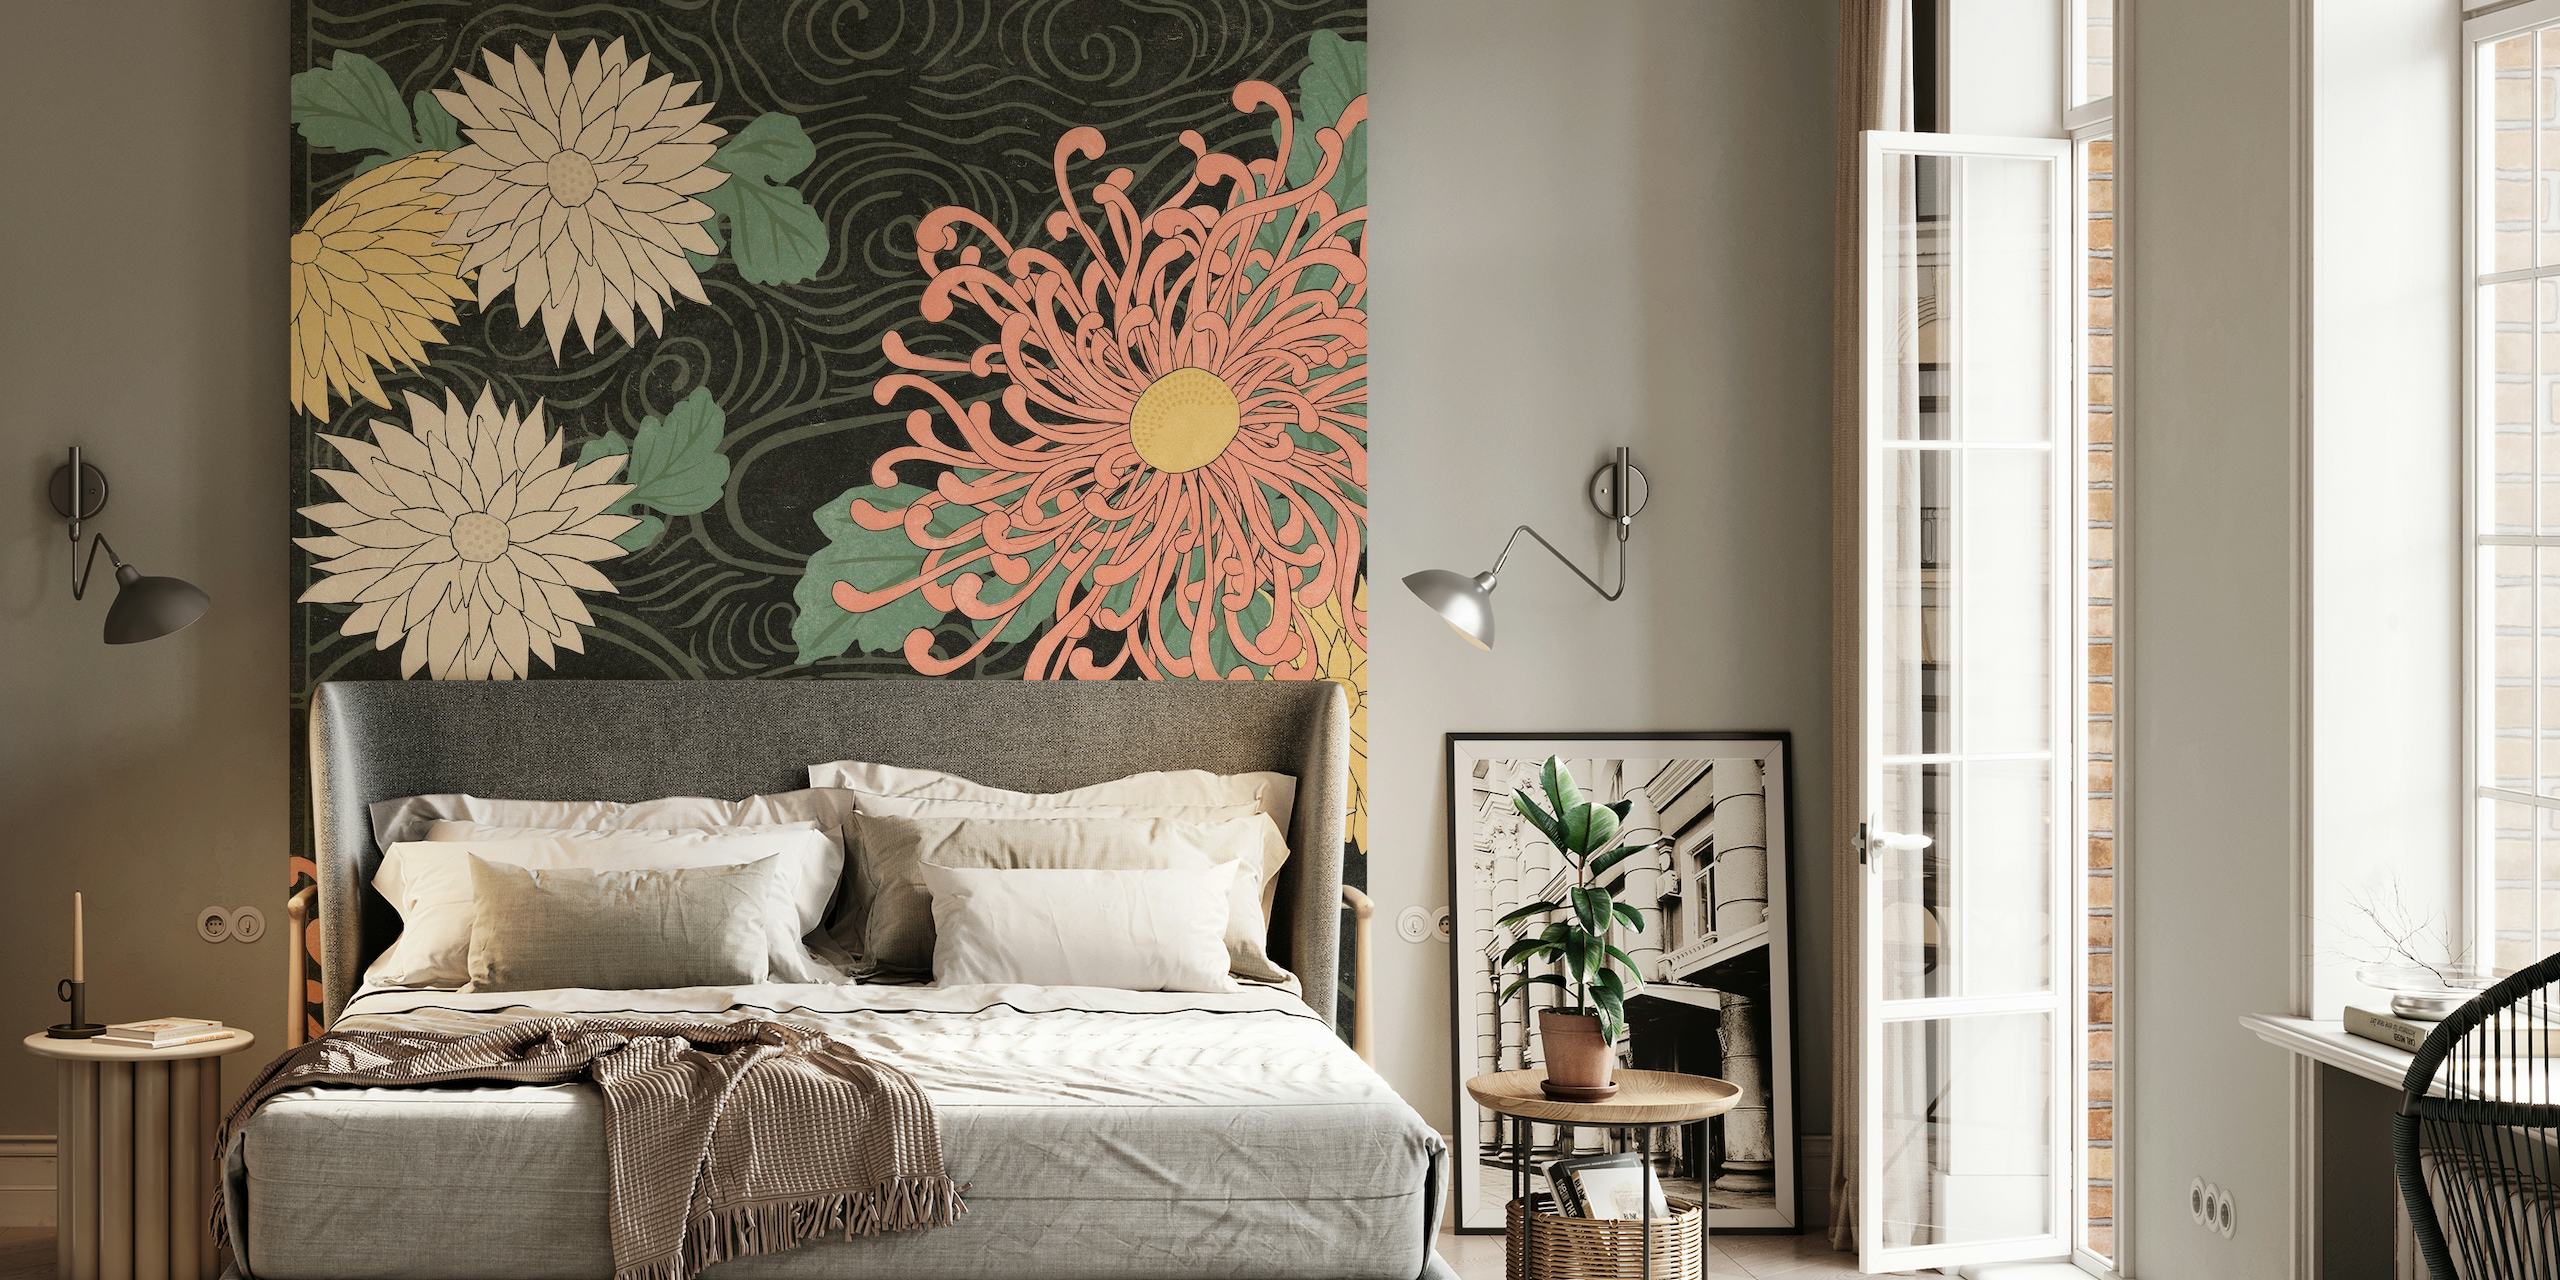 Japanese floral wallpaper with large chrysanthemum print